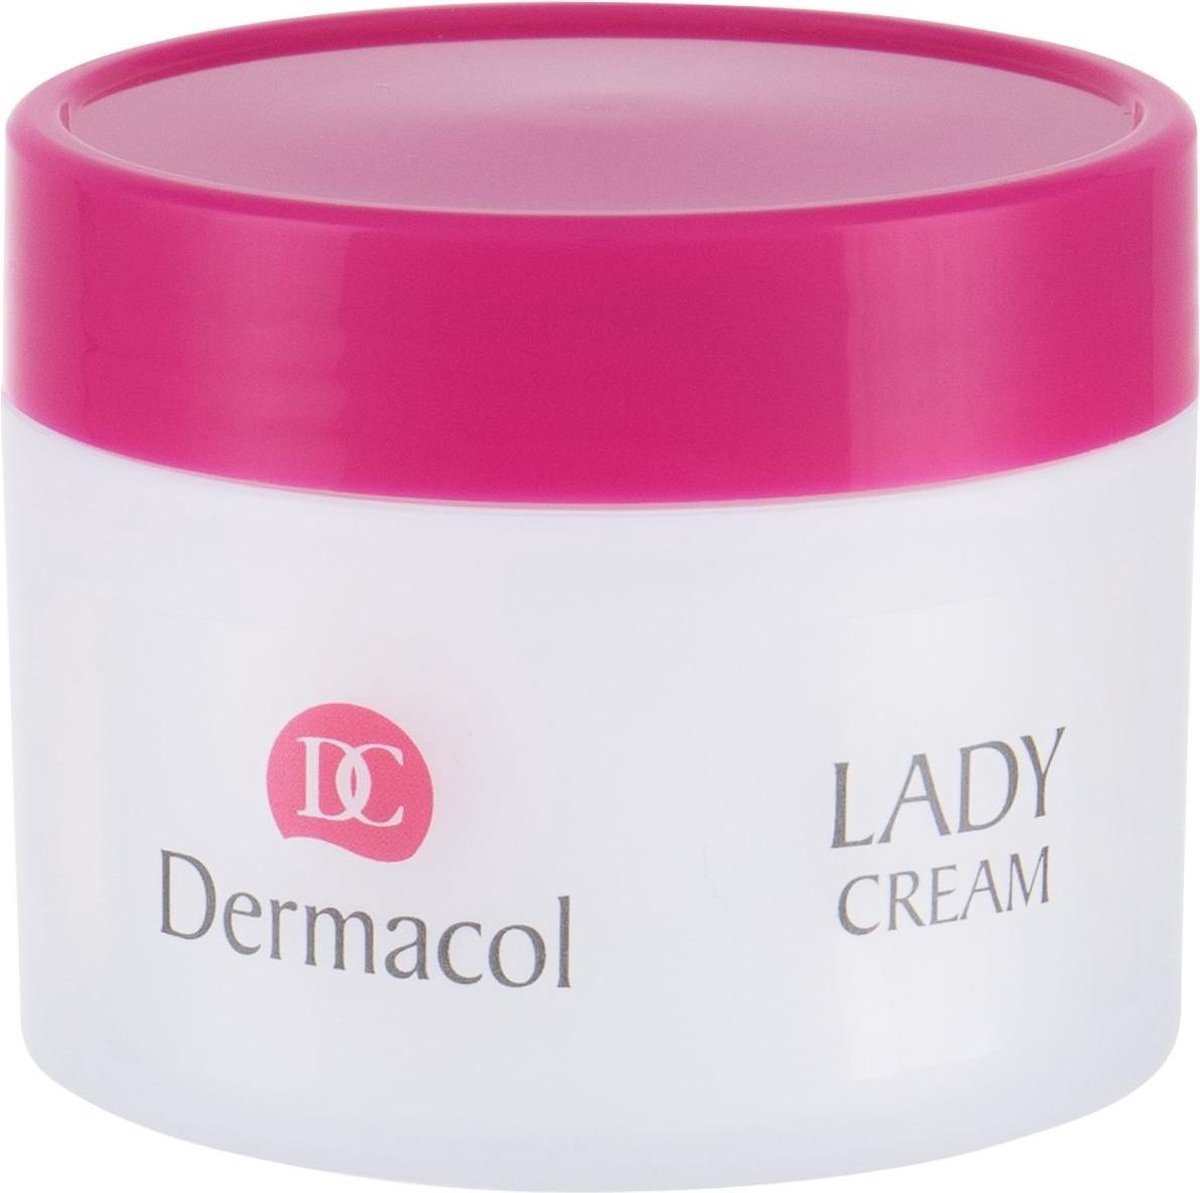 Dermacol - Lady Cream (Dry Skin) Daily Anti Wrinkle Cream - 50ml